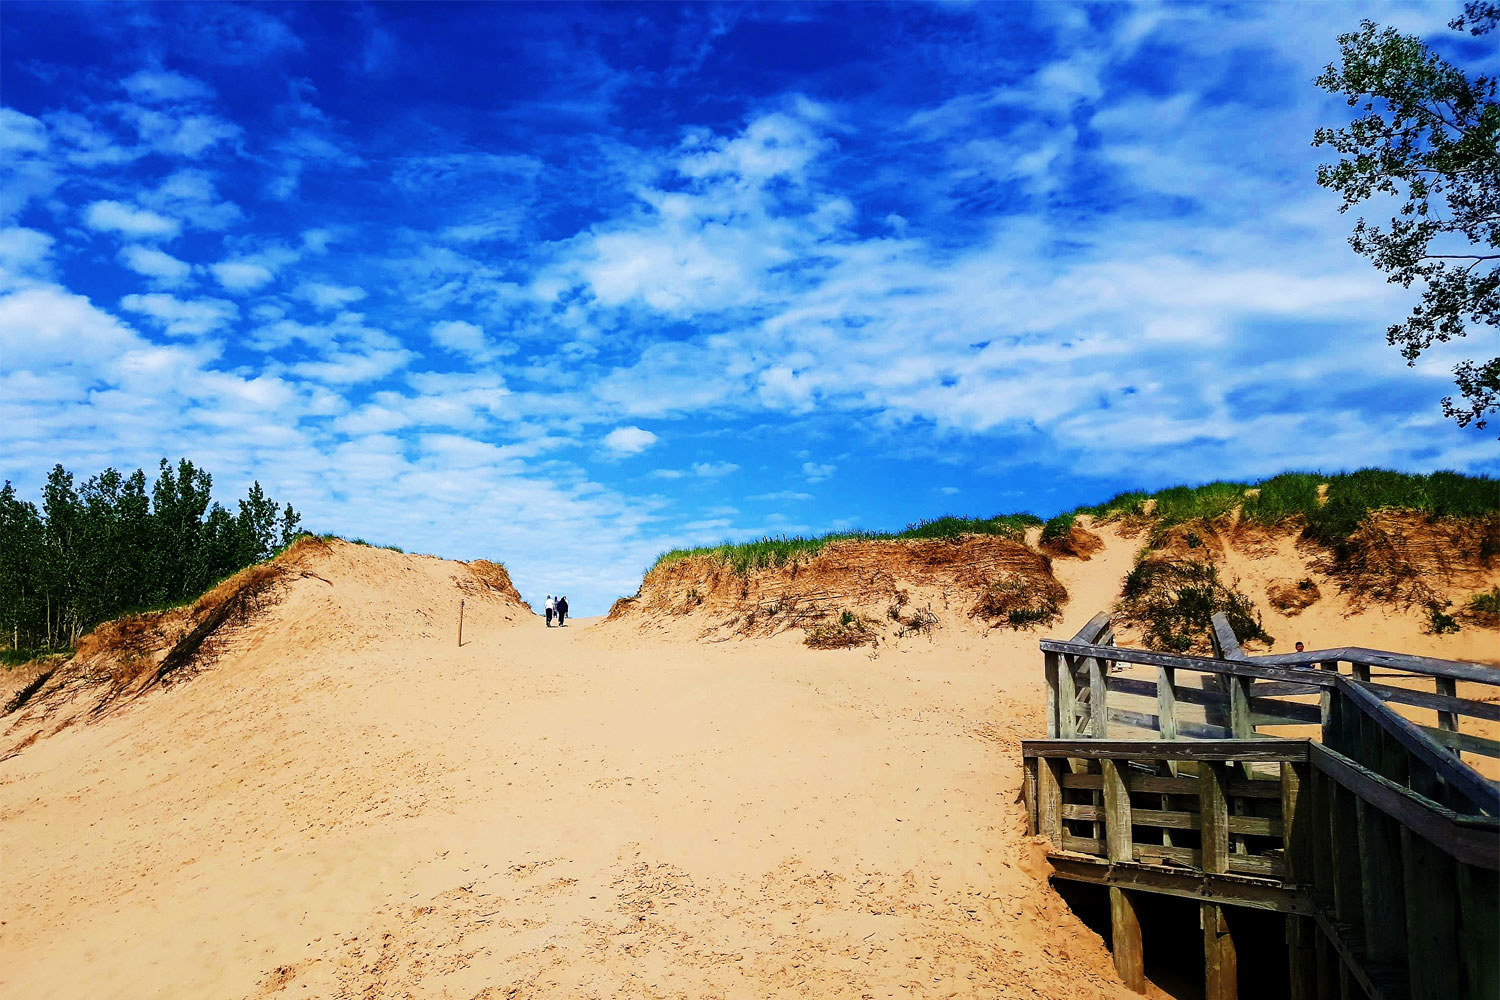 Sandy dunes and blue sky.